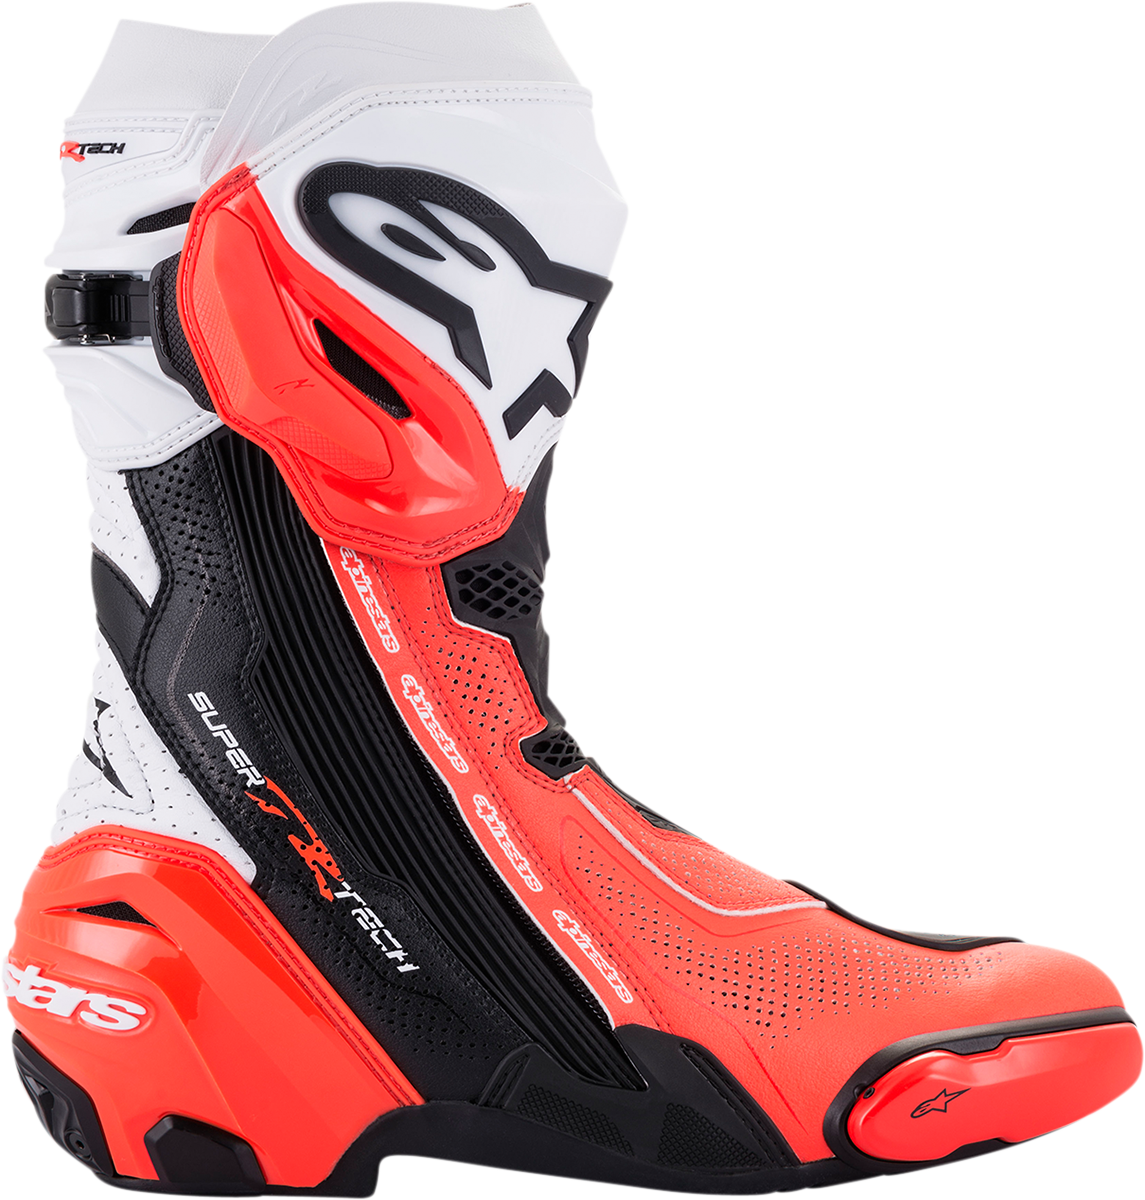 ALPINESTARS Supertech V Boots - Black/Fluo Red/White - US 11.5 / EU 46 2220121-124-46